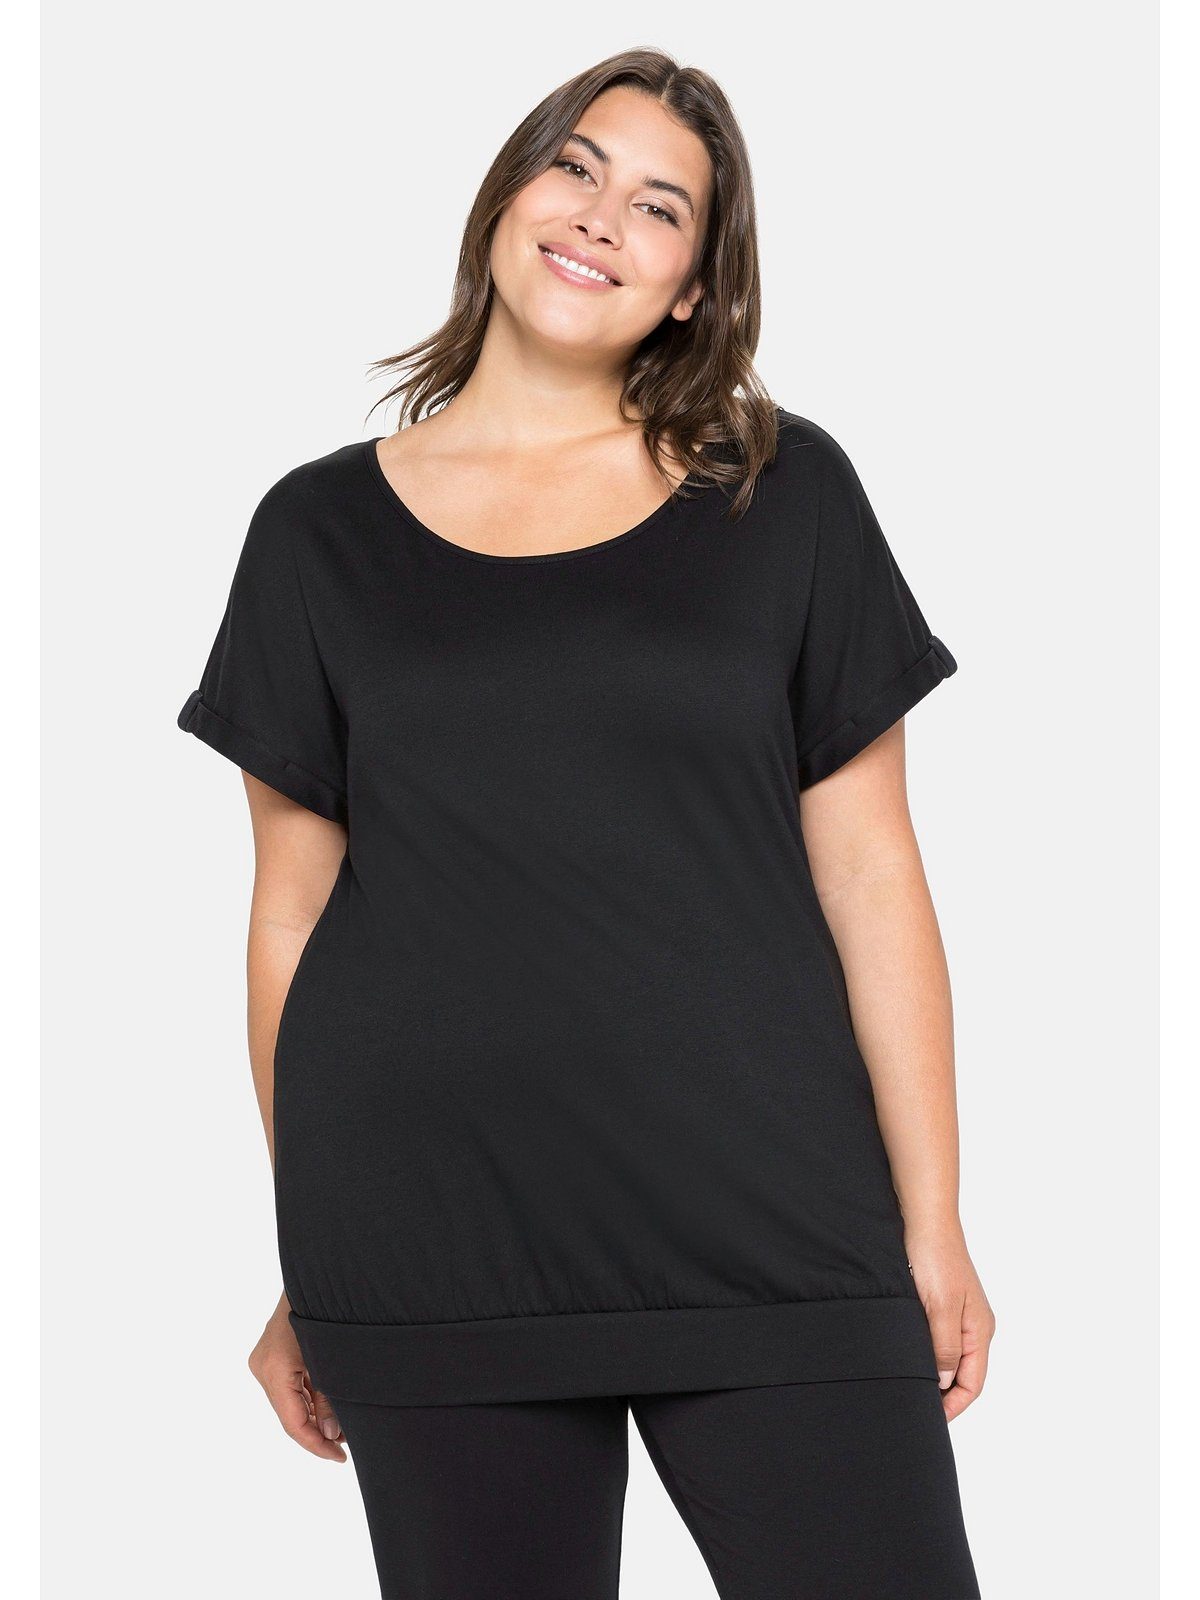 Damen Shirts Sheego T-Shirt Relaxshirt mit Streifen-Applikation hinten